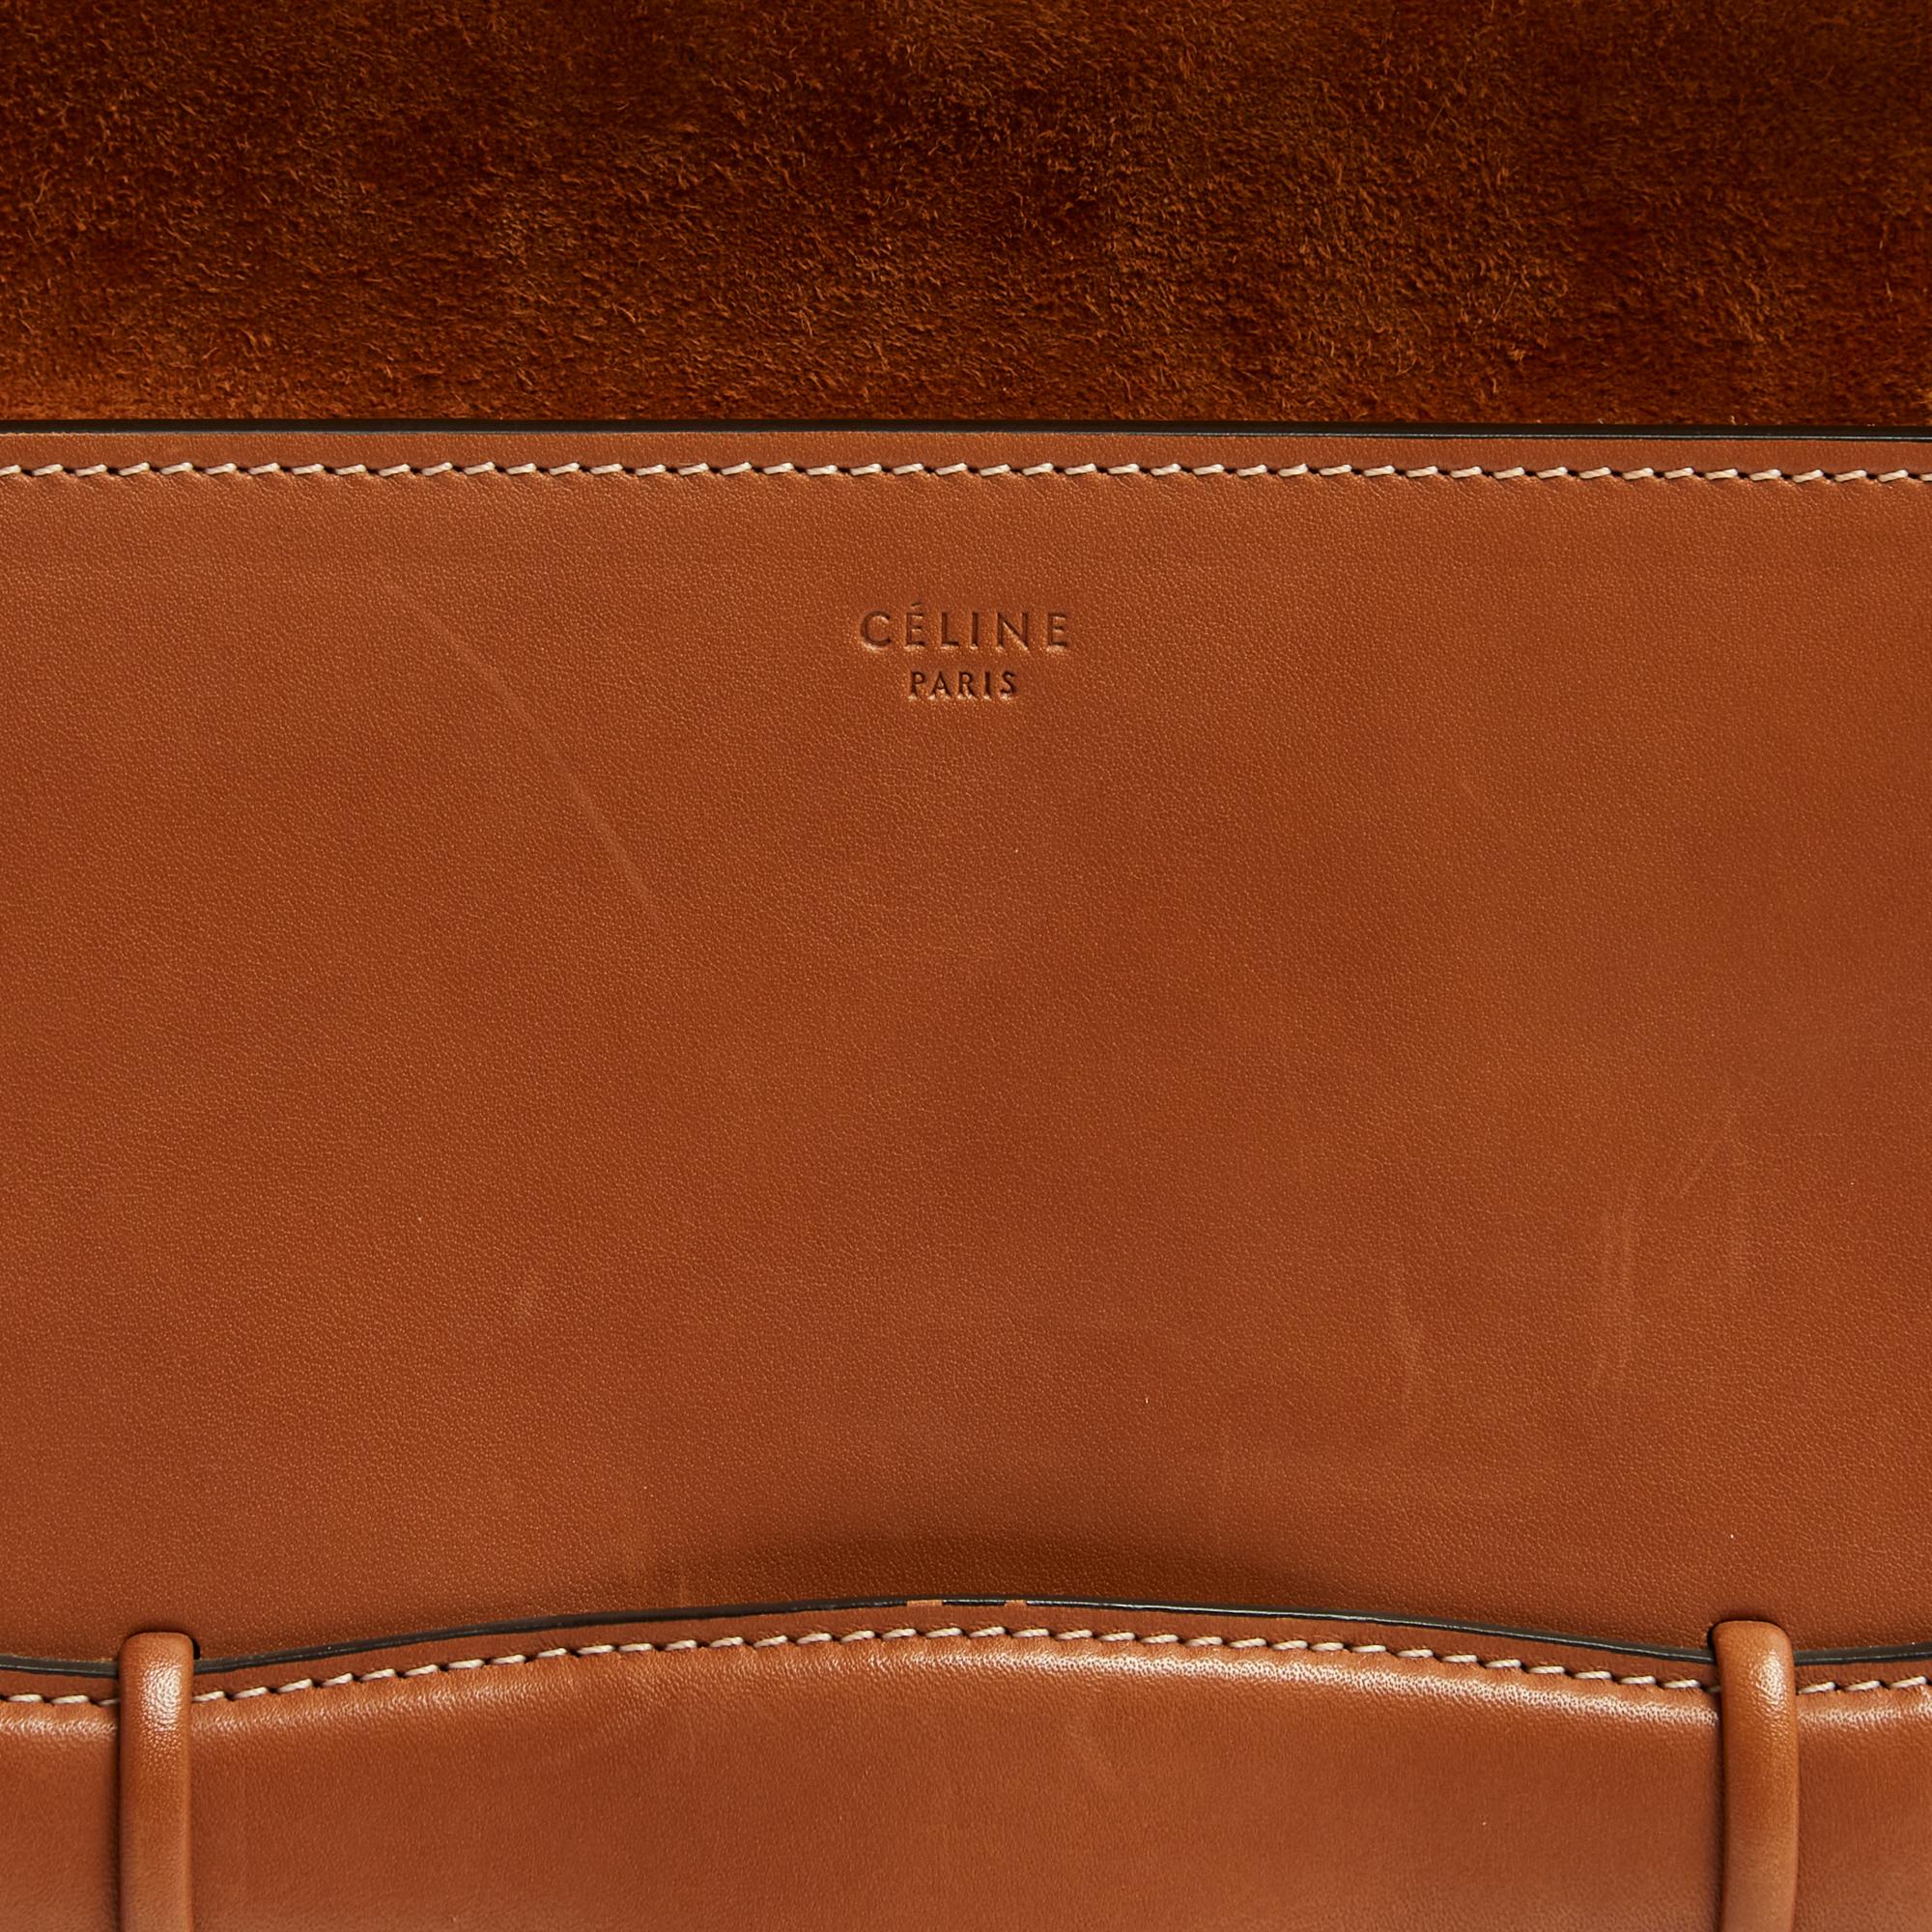 Women's or Men's 2018 Phoebe Philo Celine Symmetrical Bag natural leather For Sale